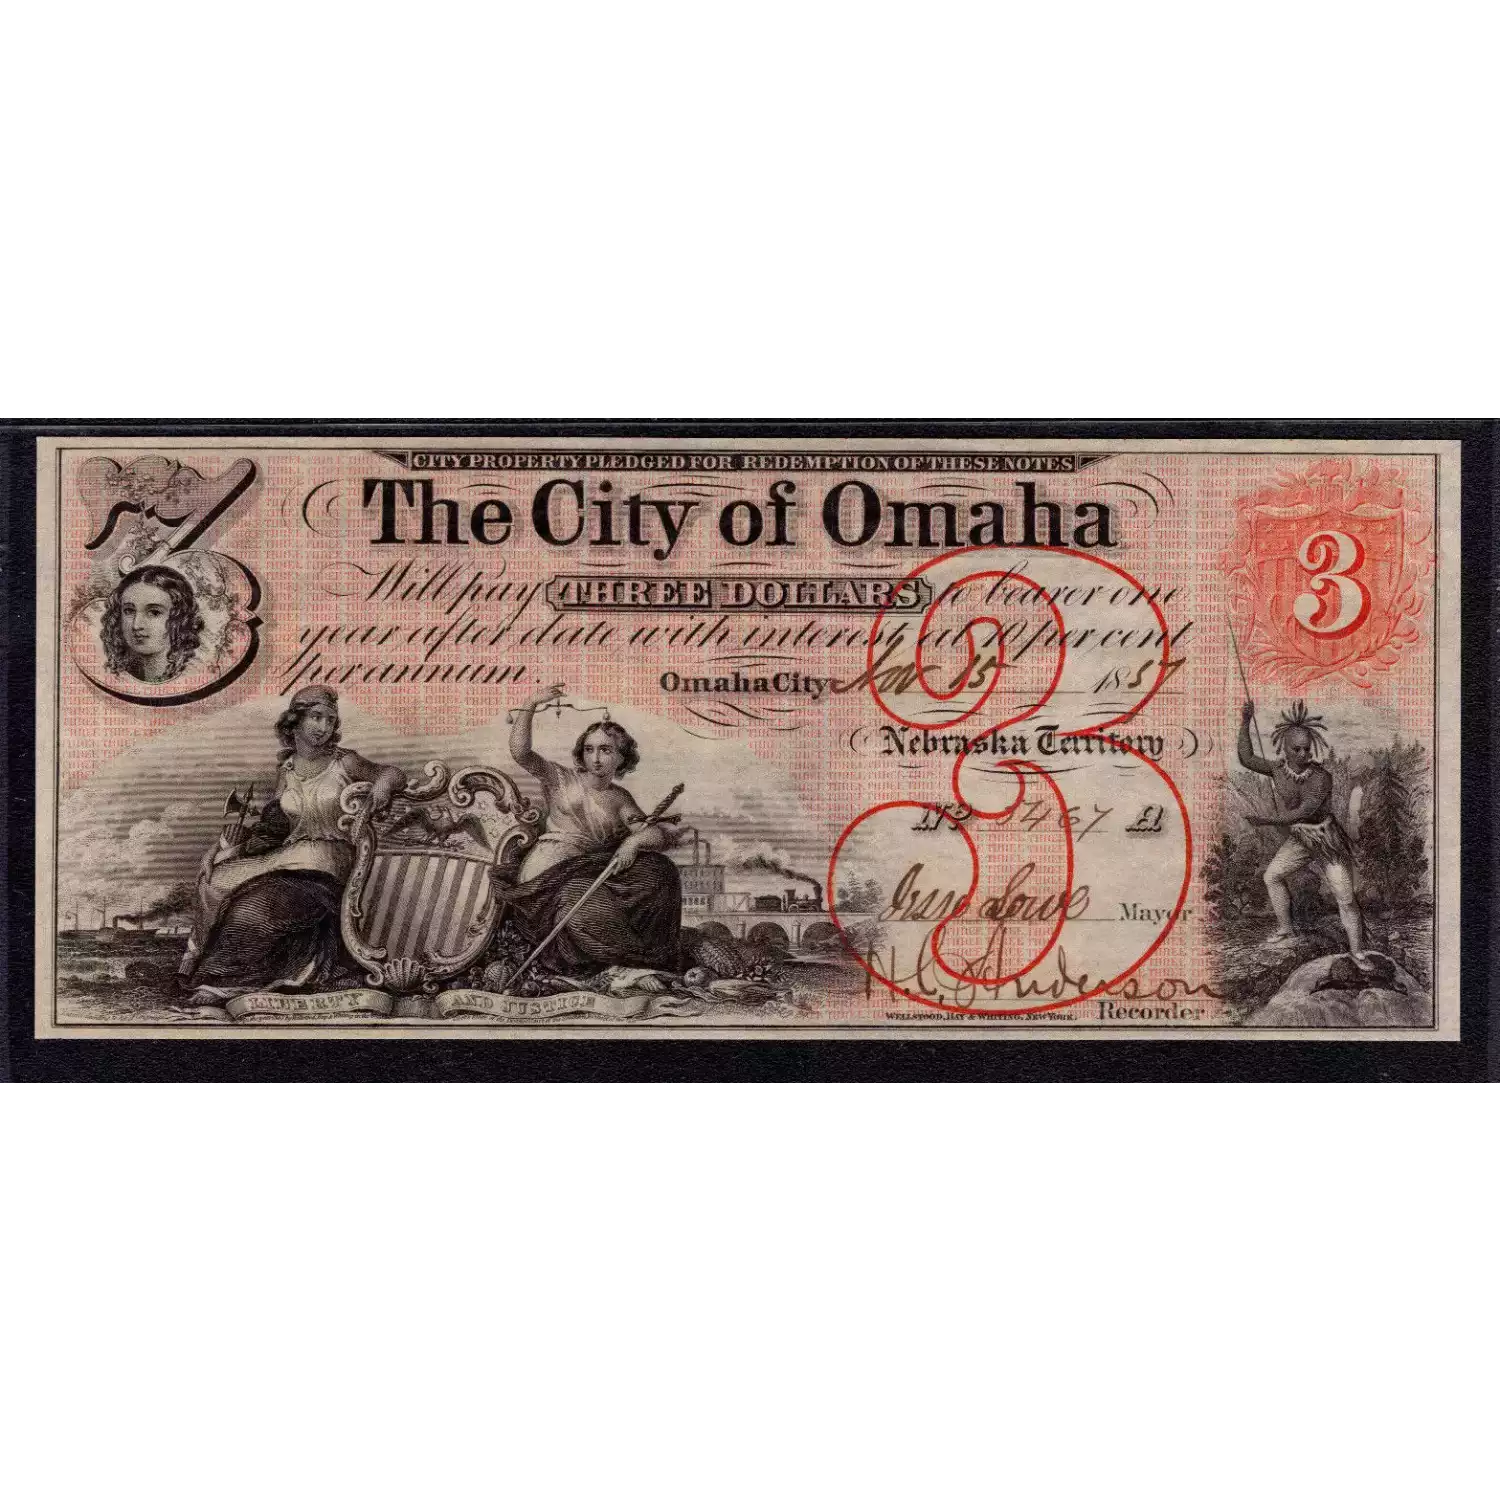 Nebraska Territory, Omaha City